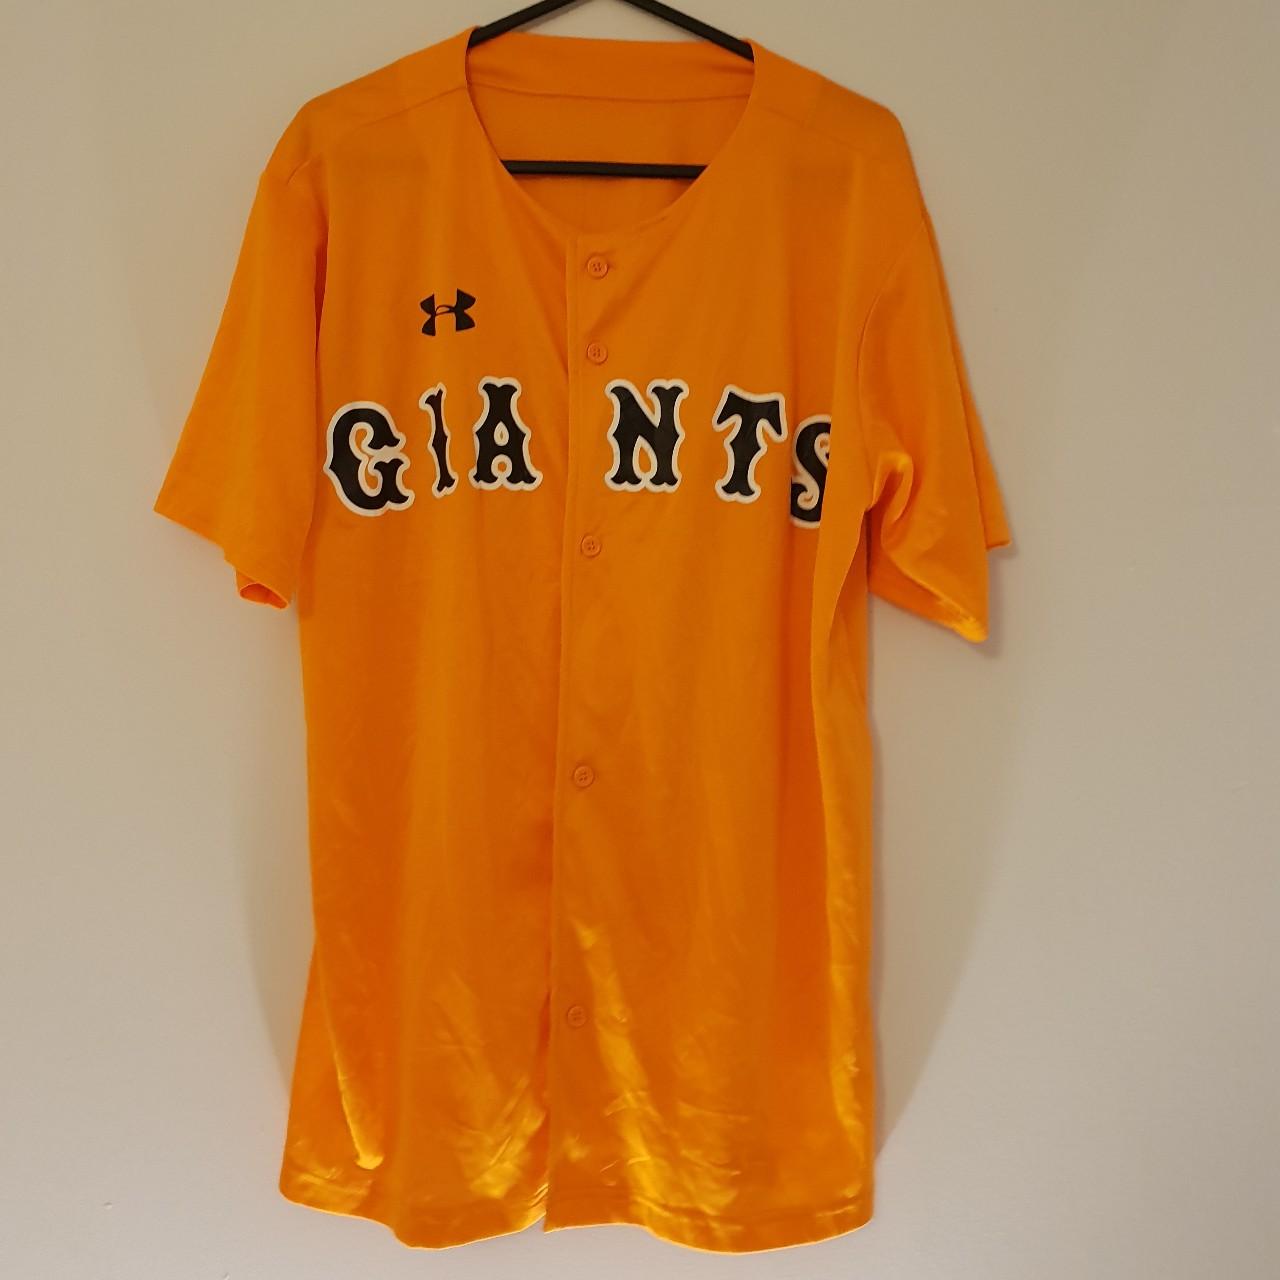 Vintage San Francisco Giants MLB Baseball Jersey - Depop